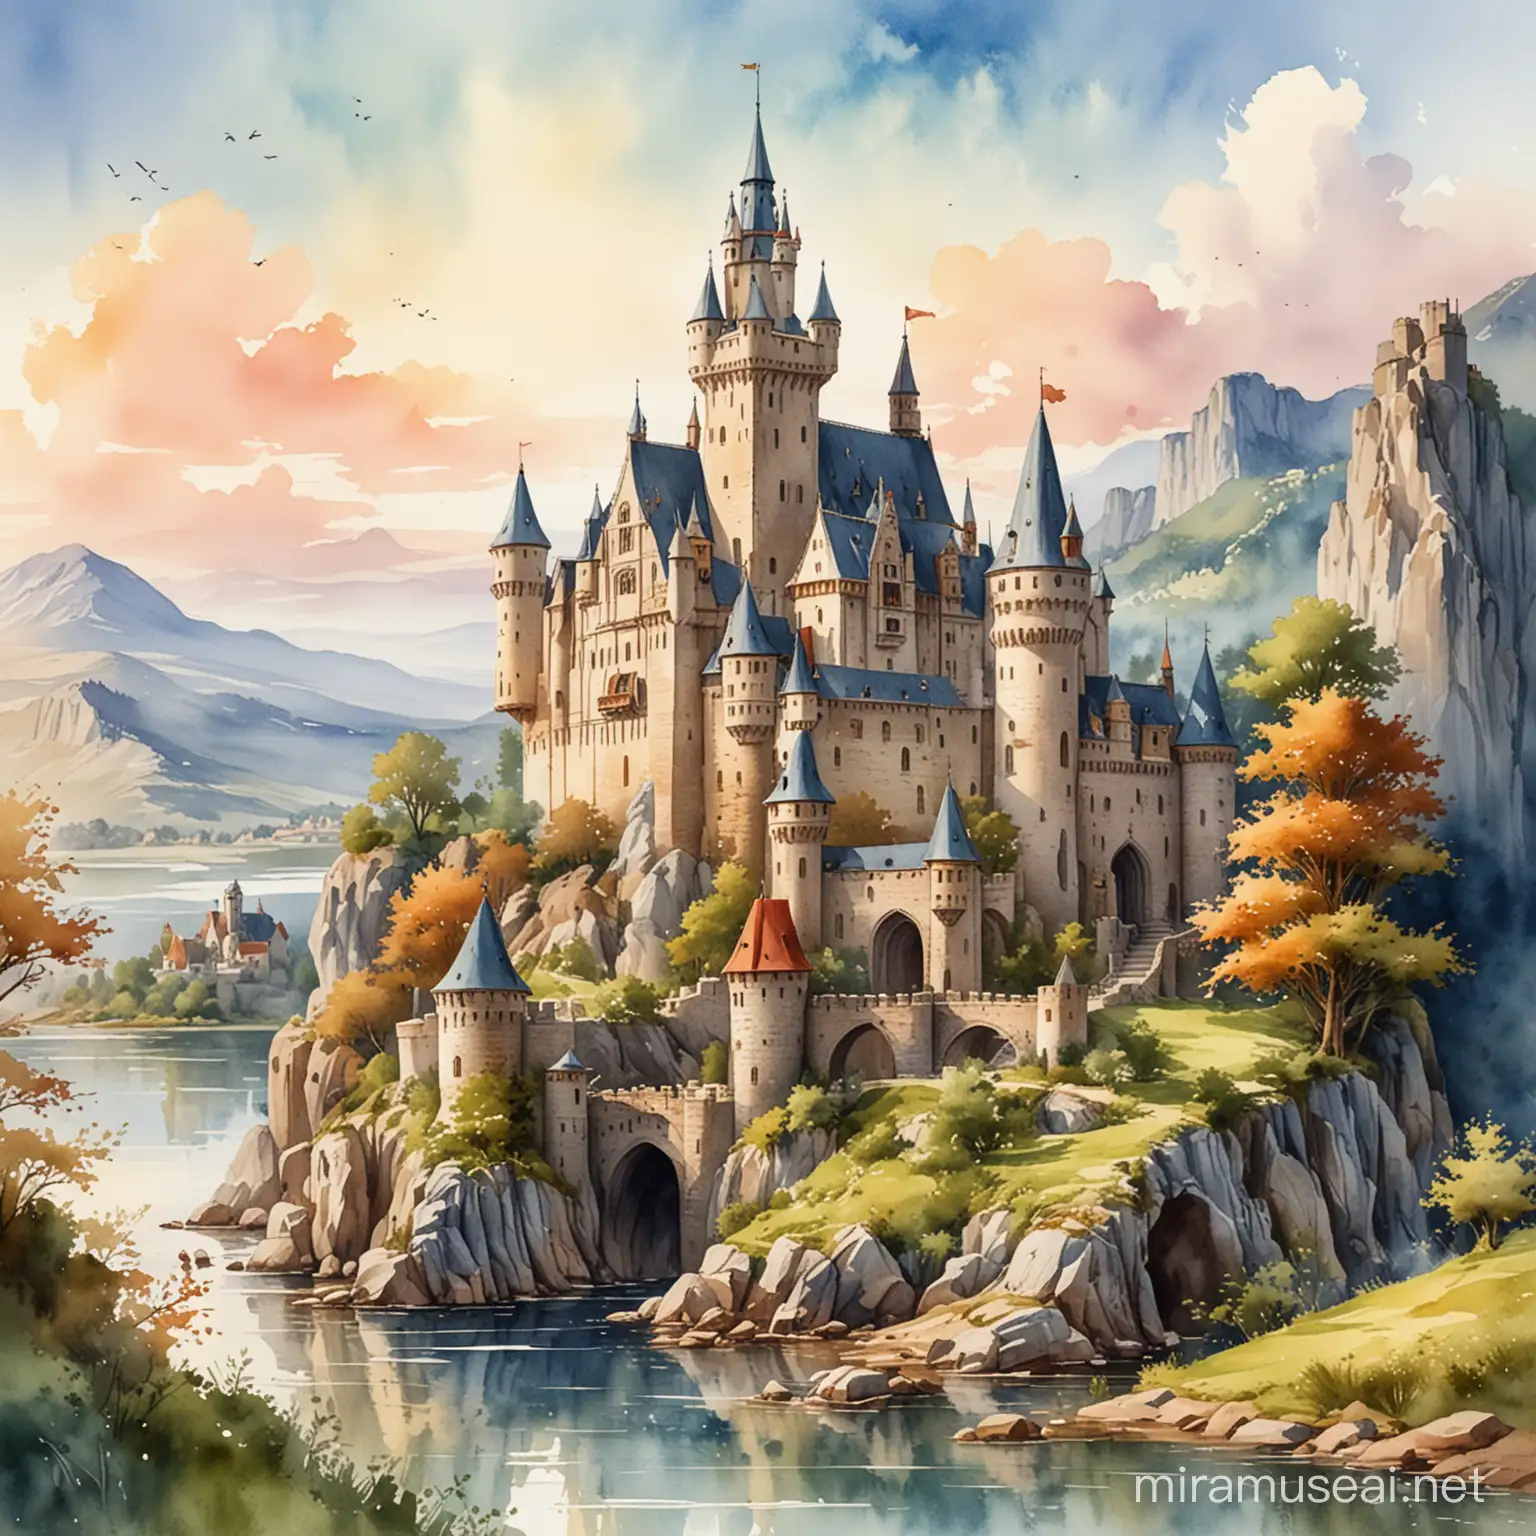 watercolor medieval castle illustration landscape